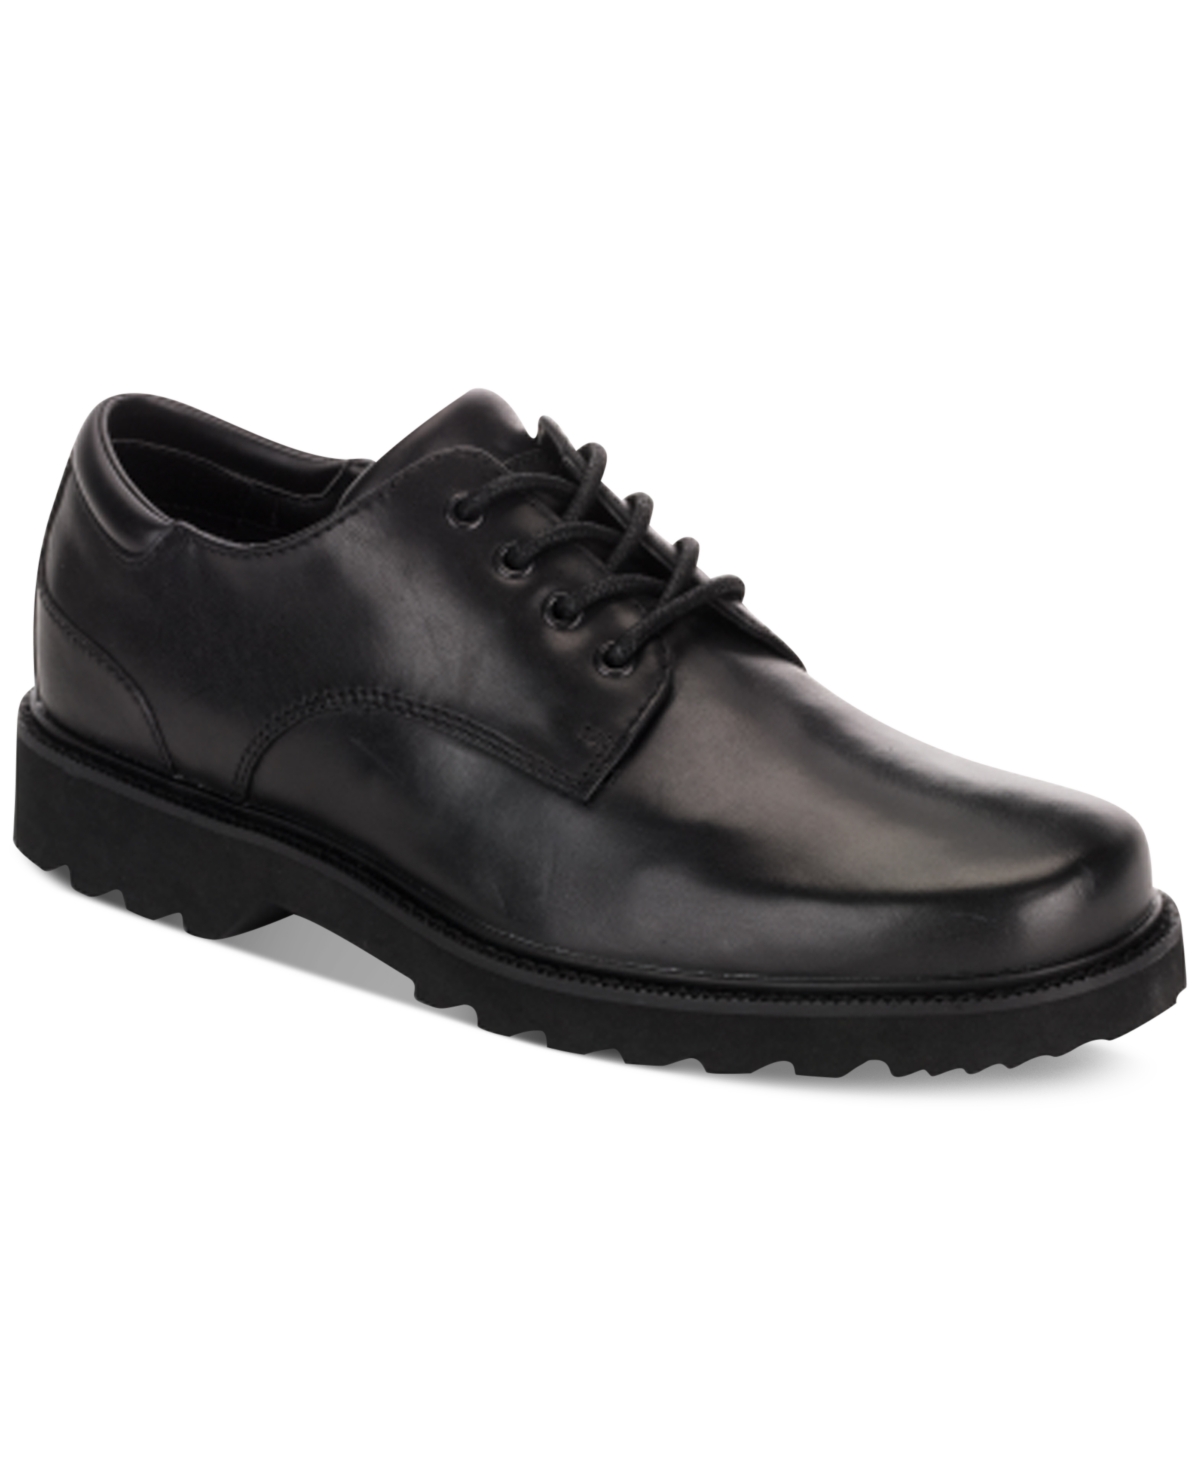 Men's Northfield Water-Resistance Shoes - Black